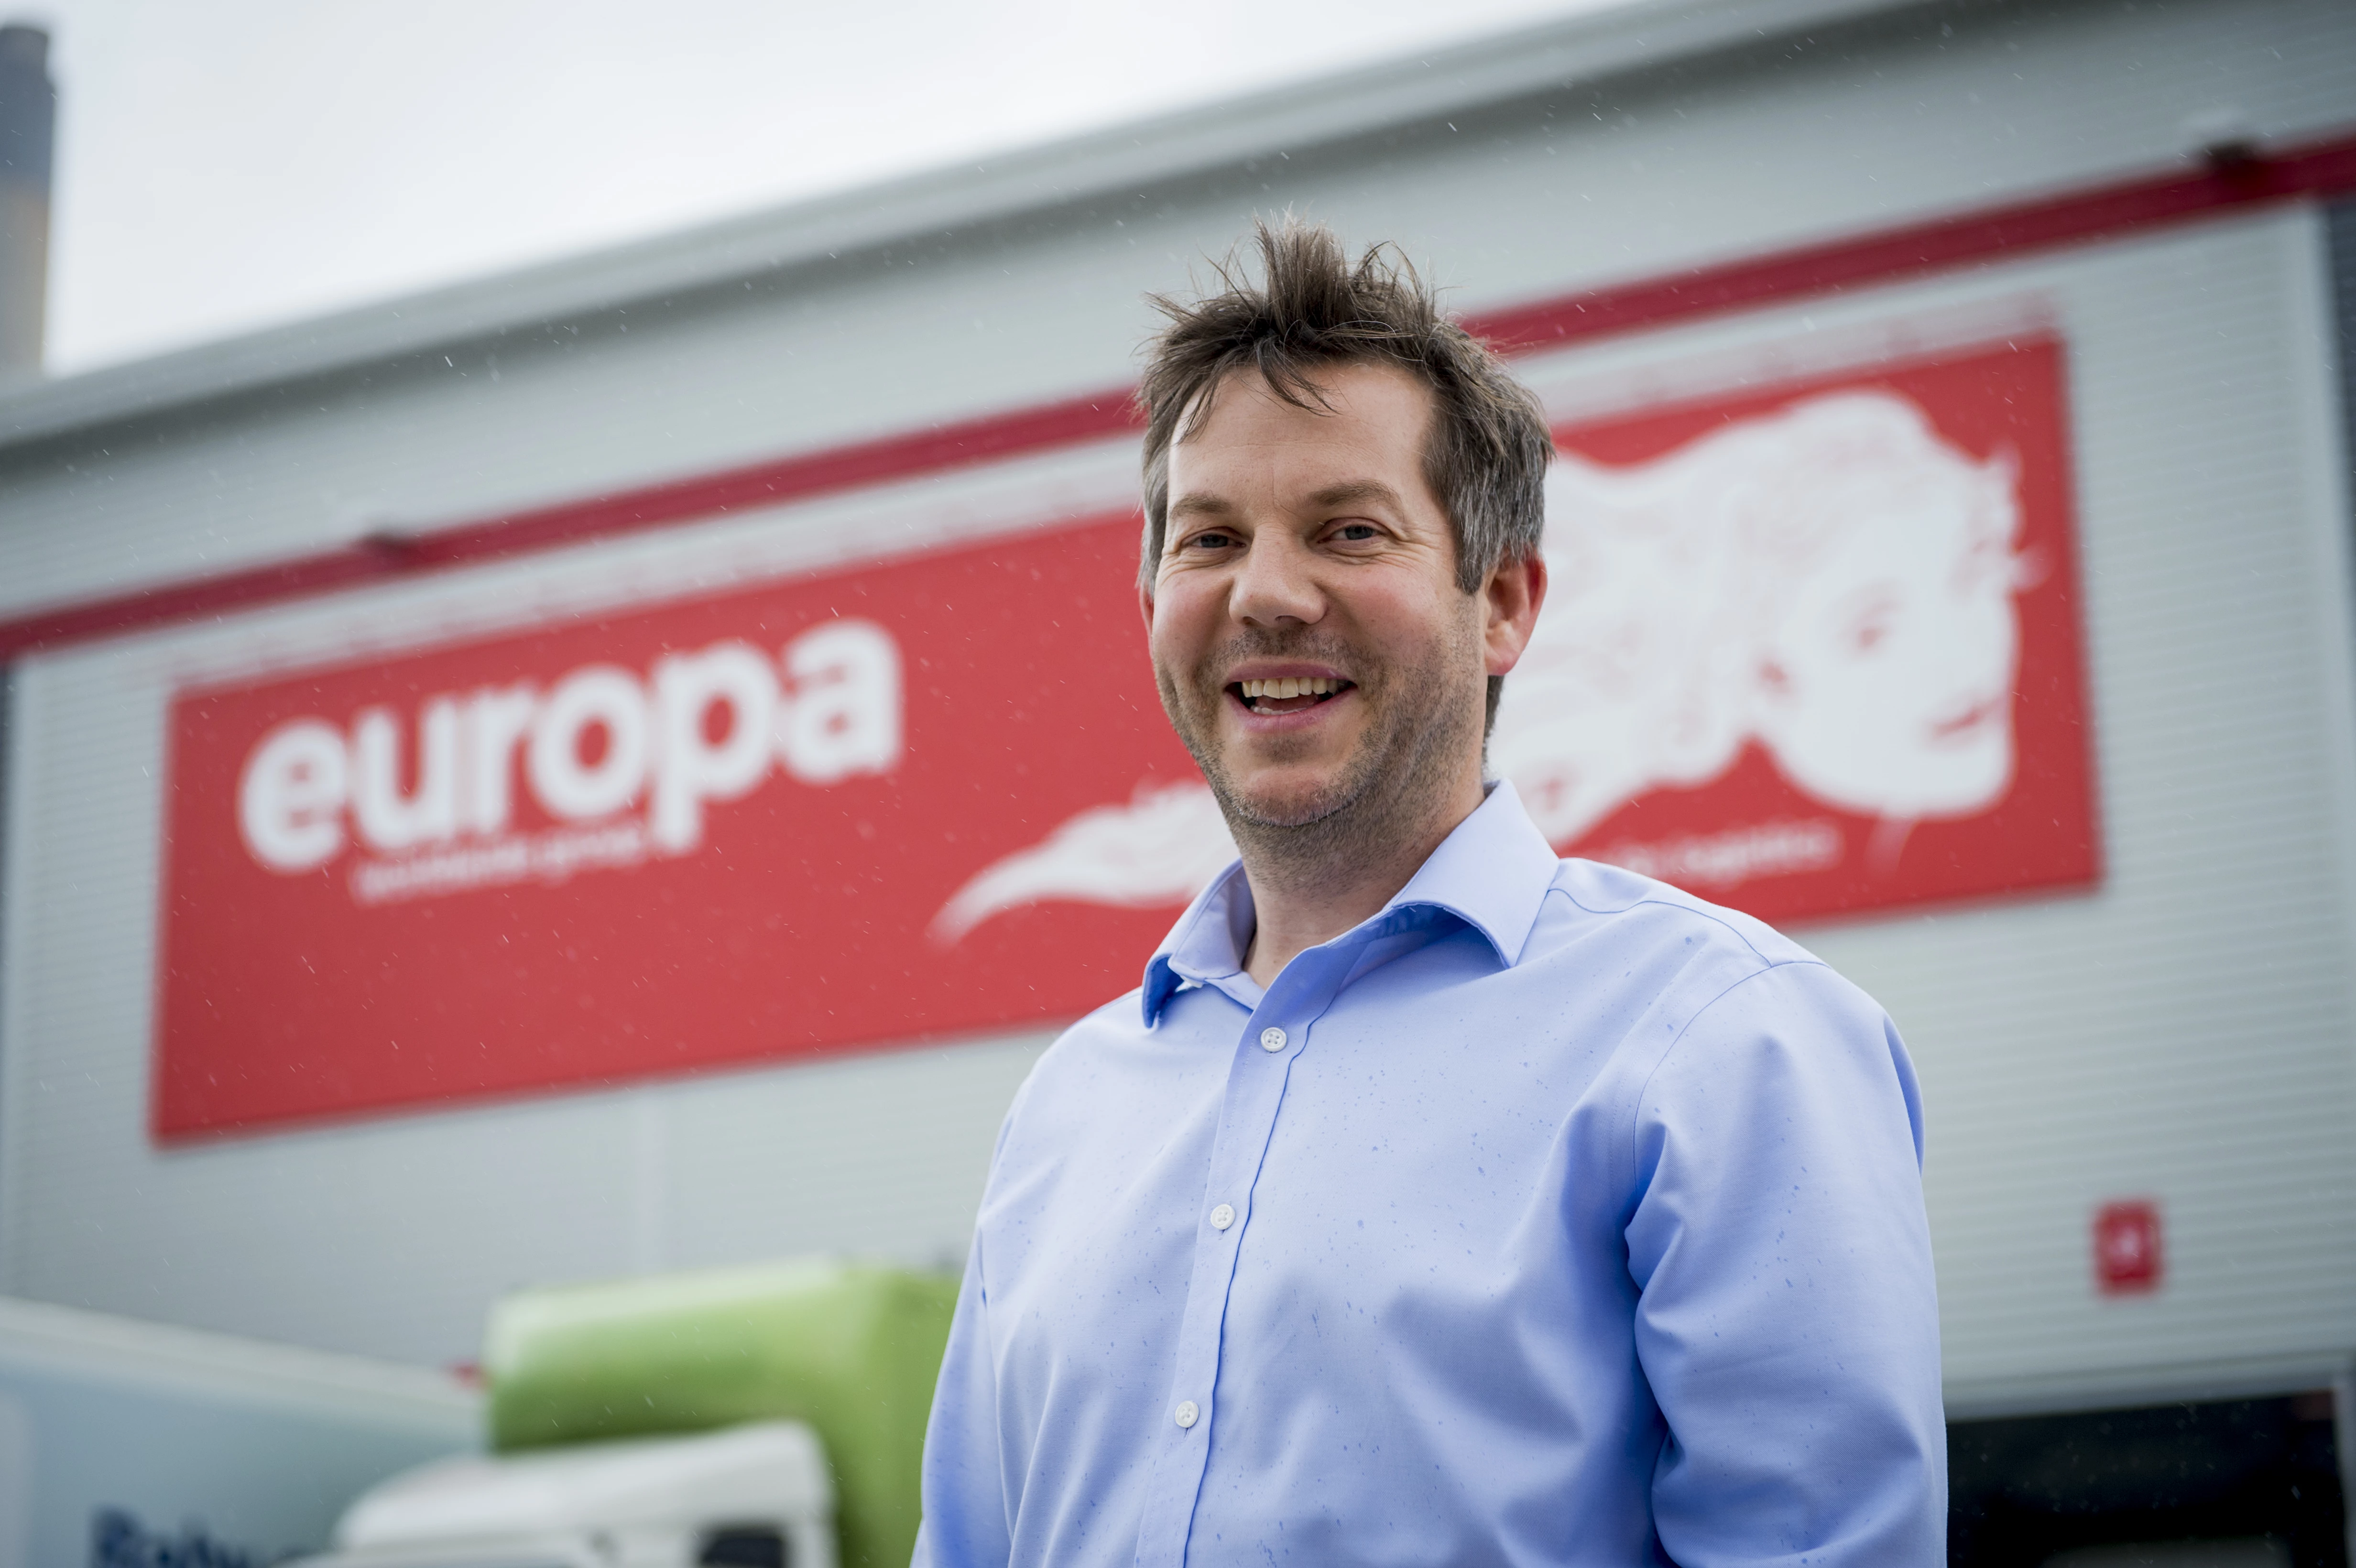 Dan Cook, Operations Director at Europa